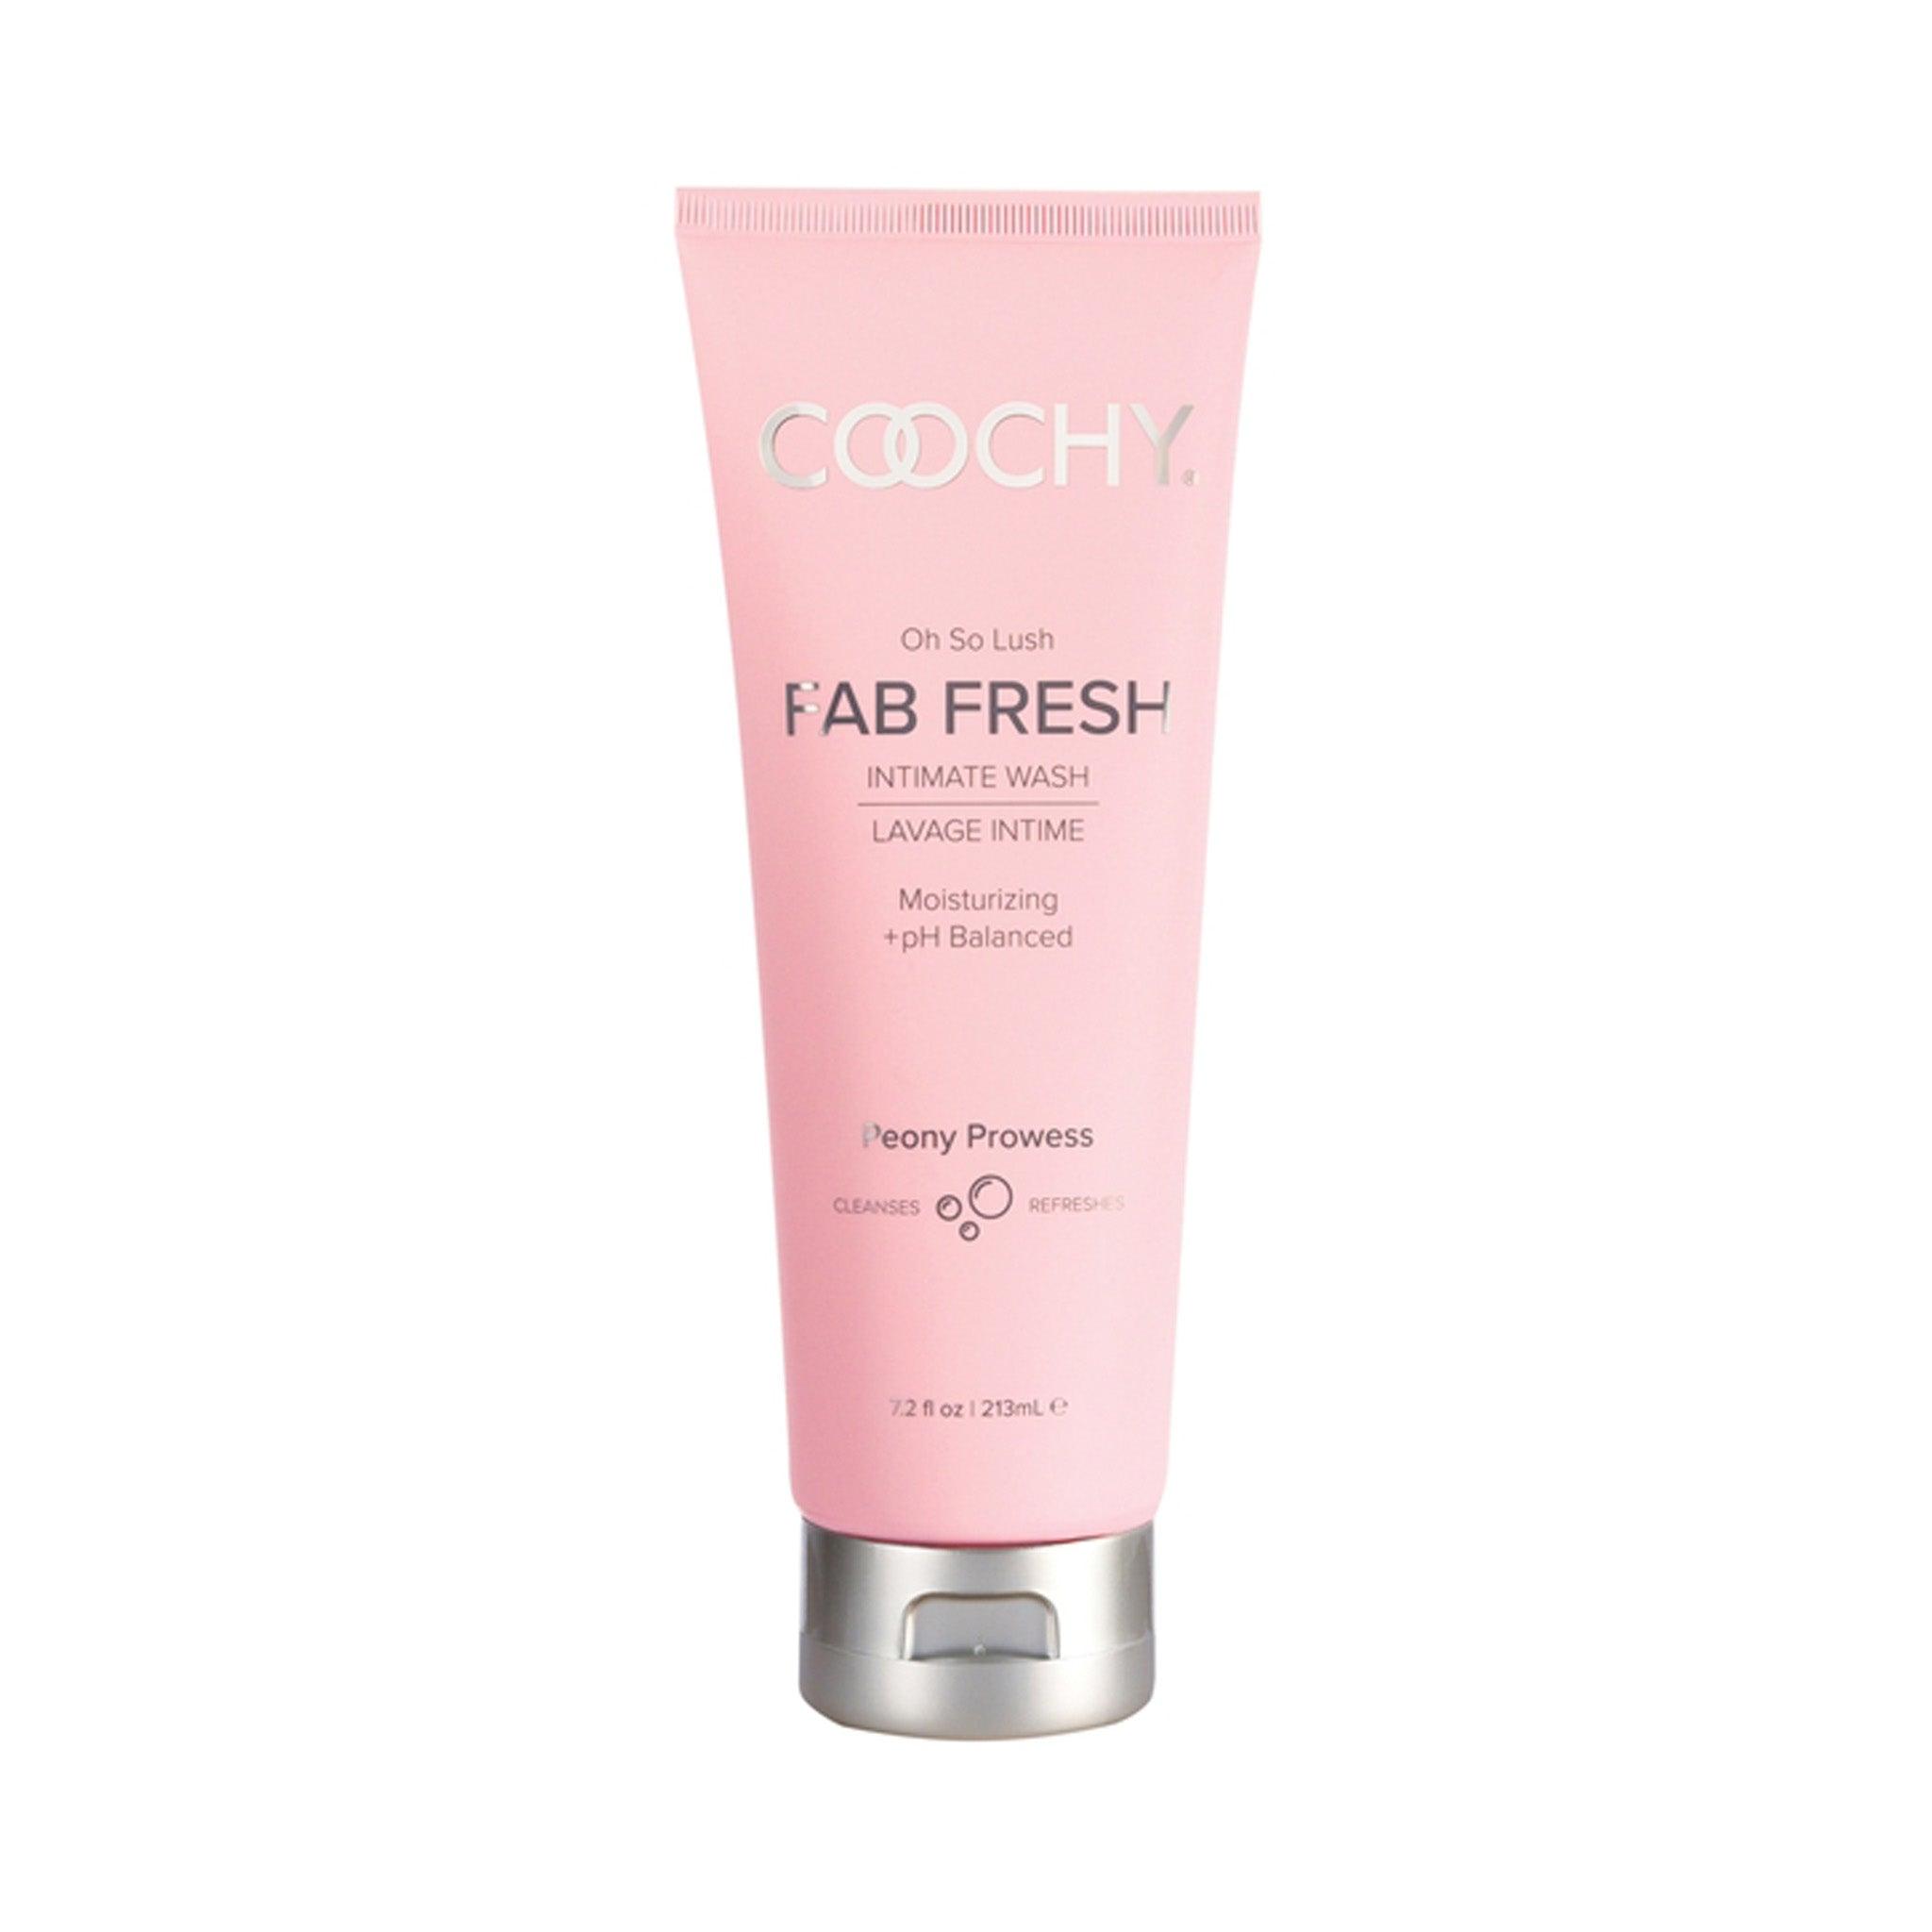 Coochy Oh So Lush Fab Fresh Intimate Wash 7.2oz Tube - CheapLubes.com